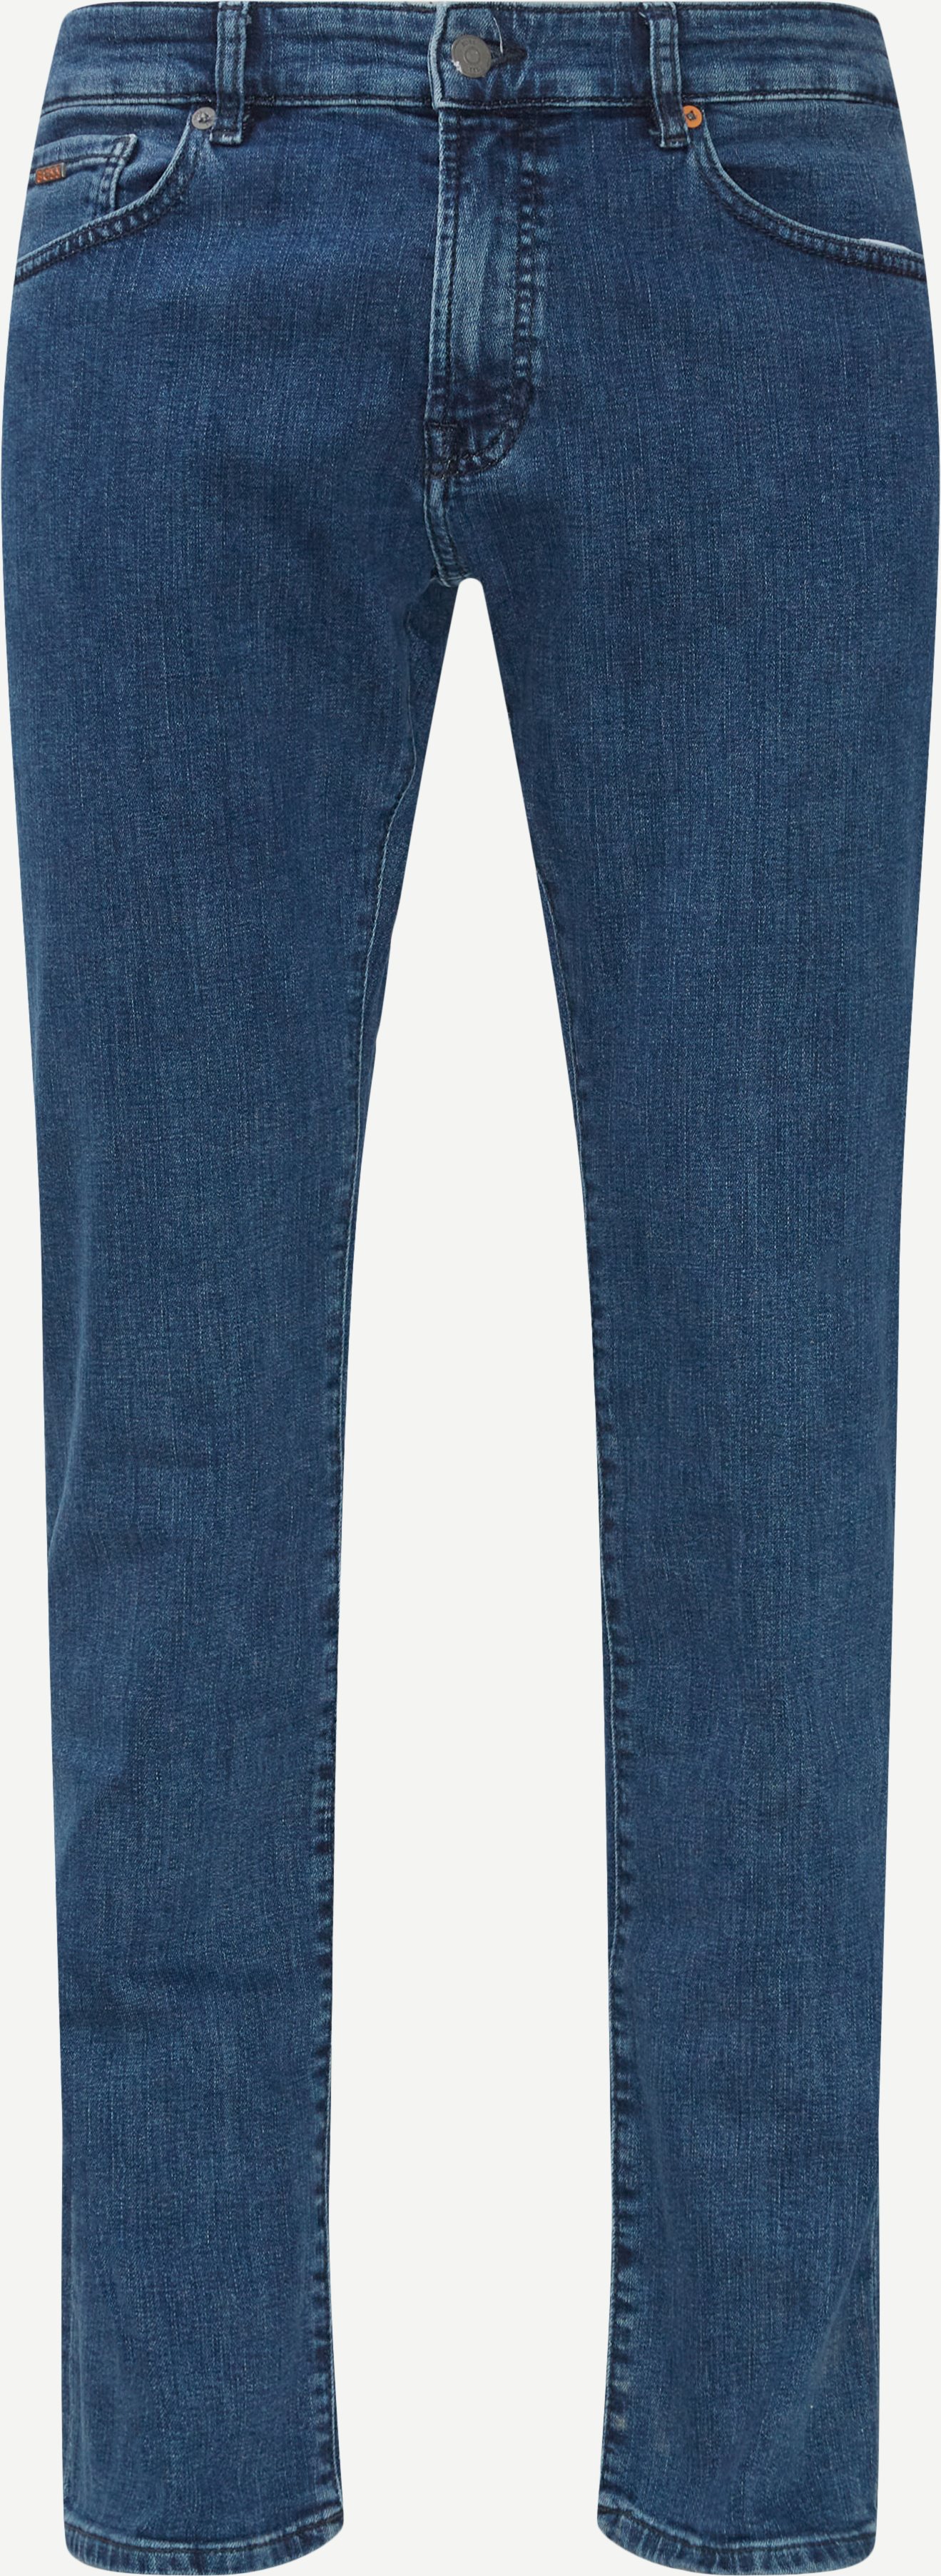 Jeans - Regular fit - Denim